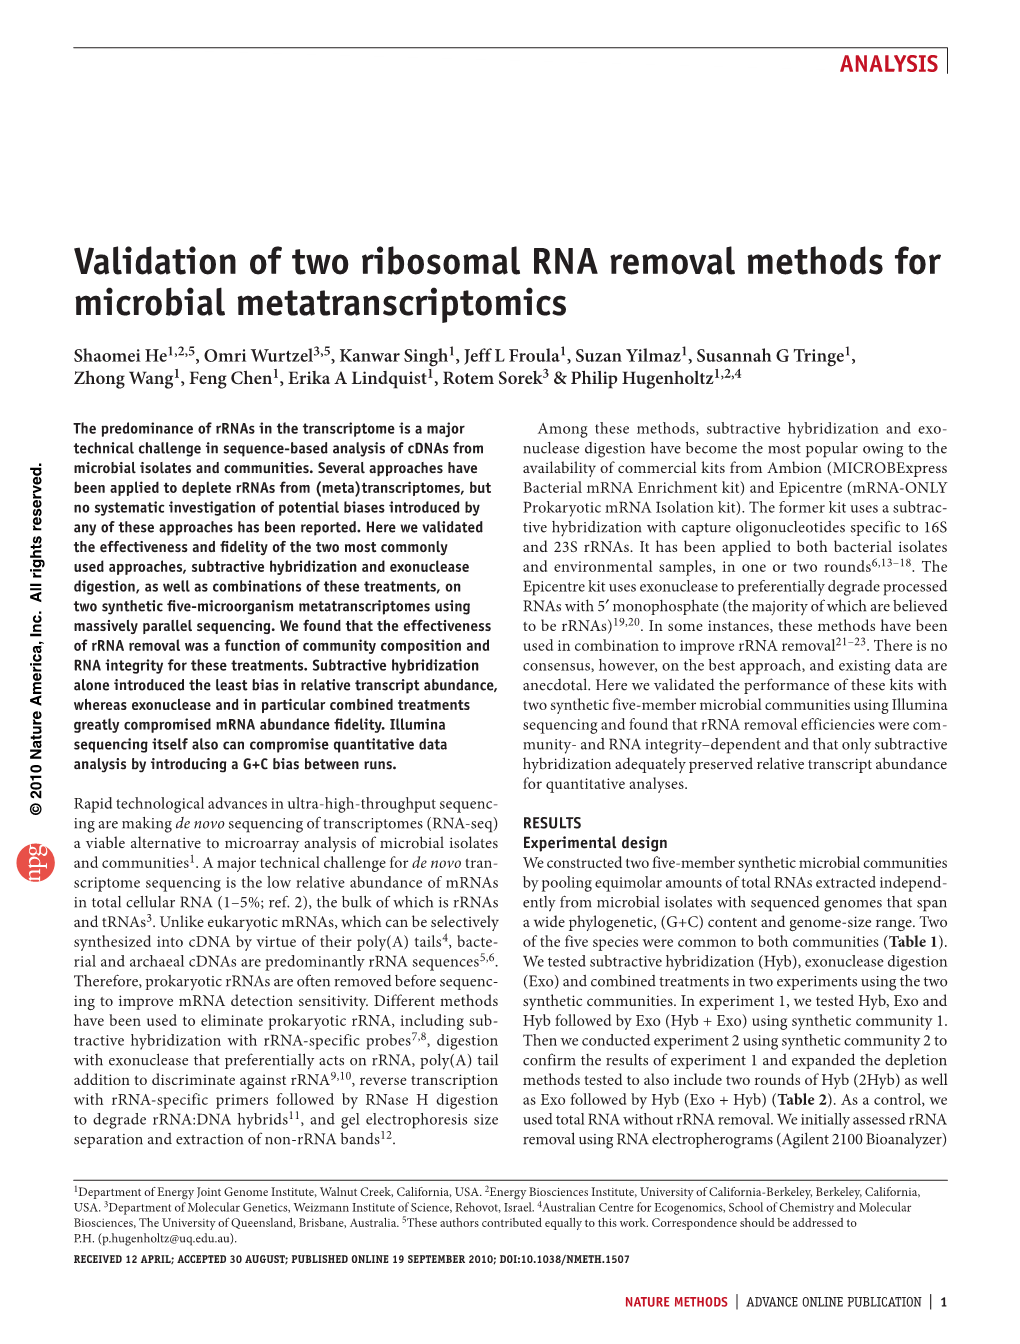 Validation of Two Ribosomal RNA Removal Methods for Microbial Metatranscriptomics